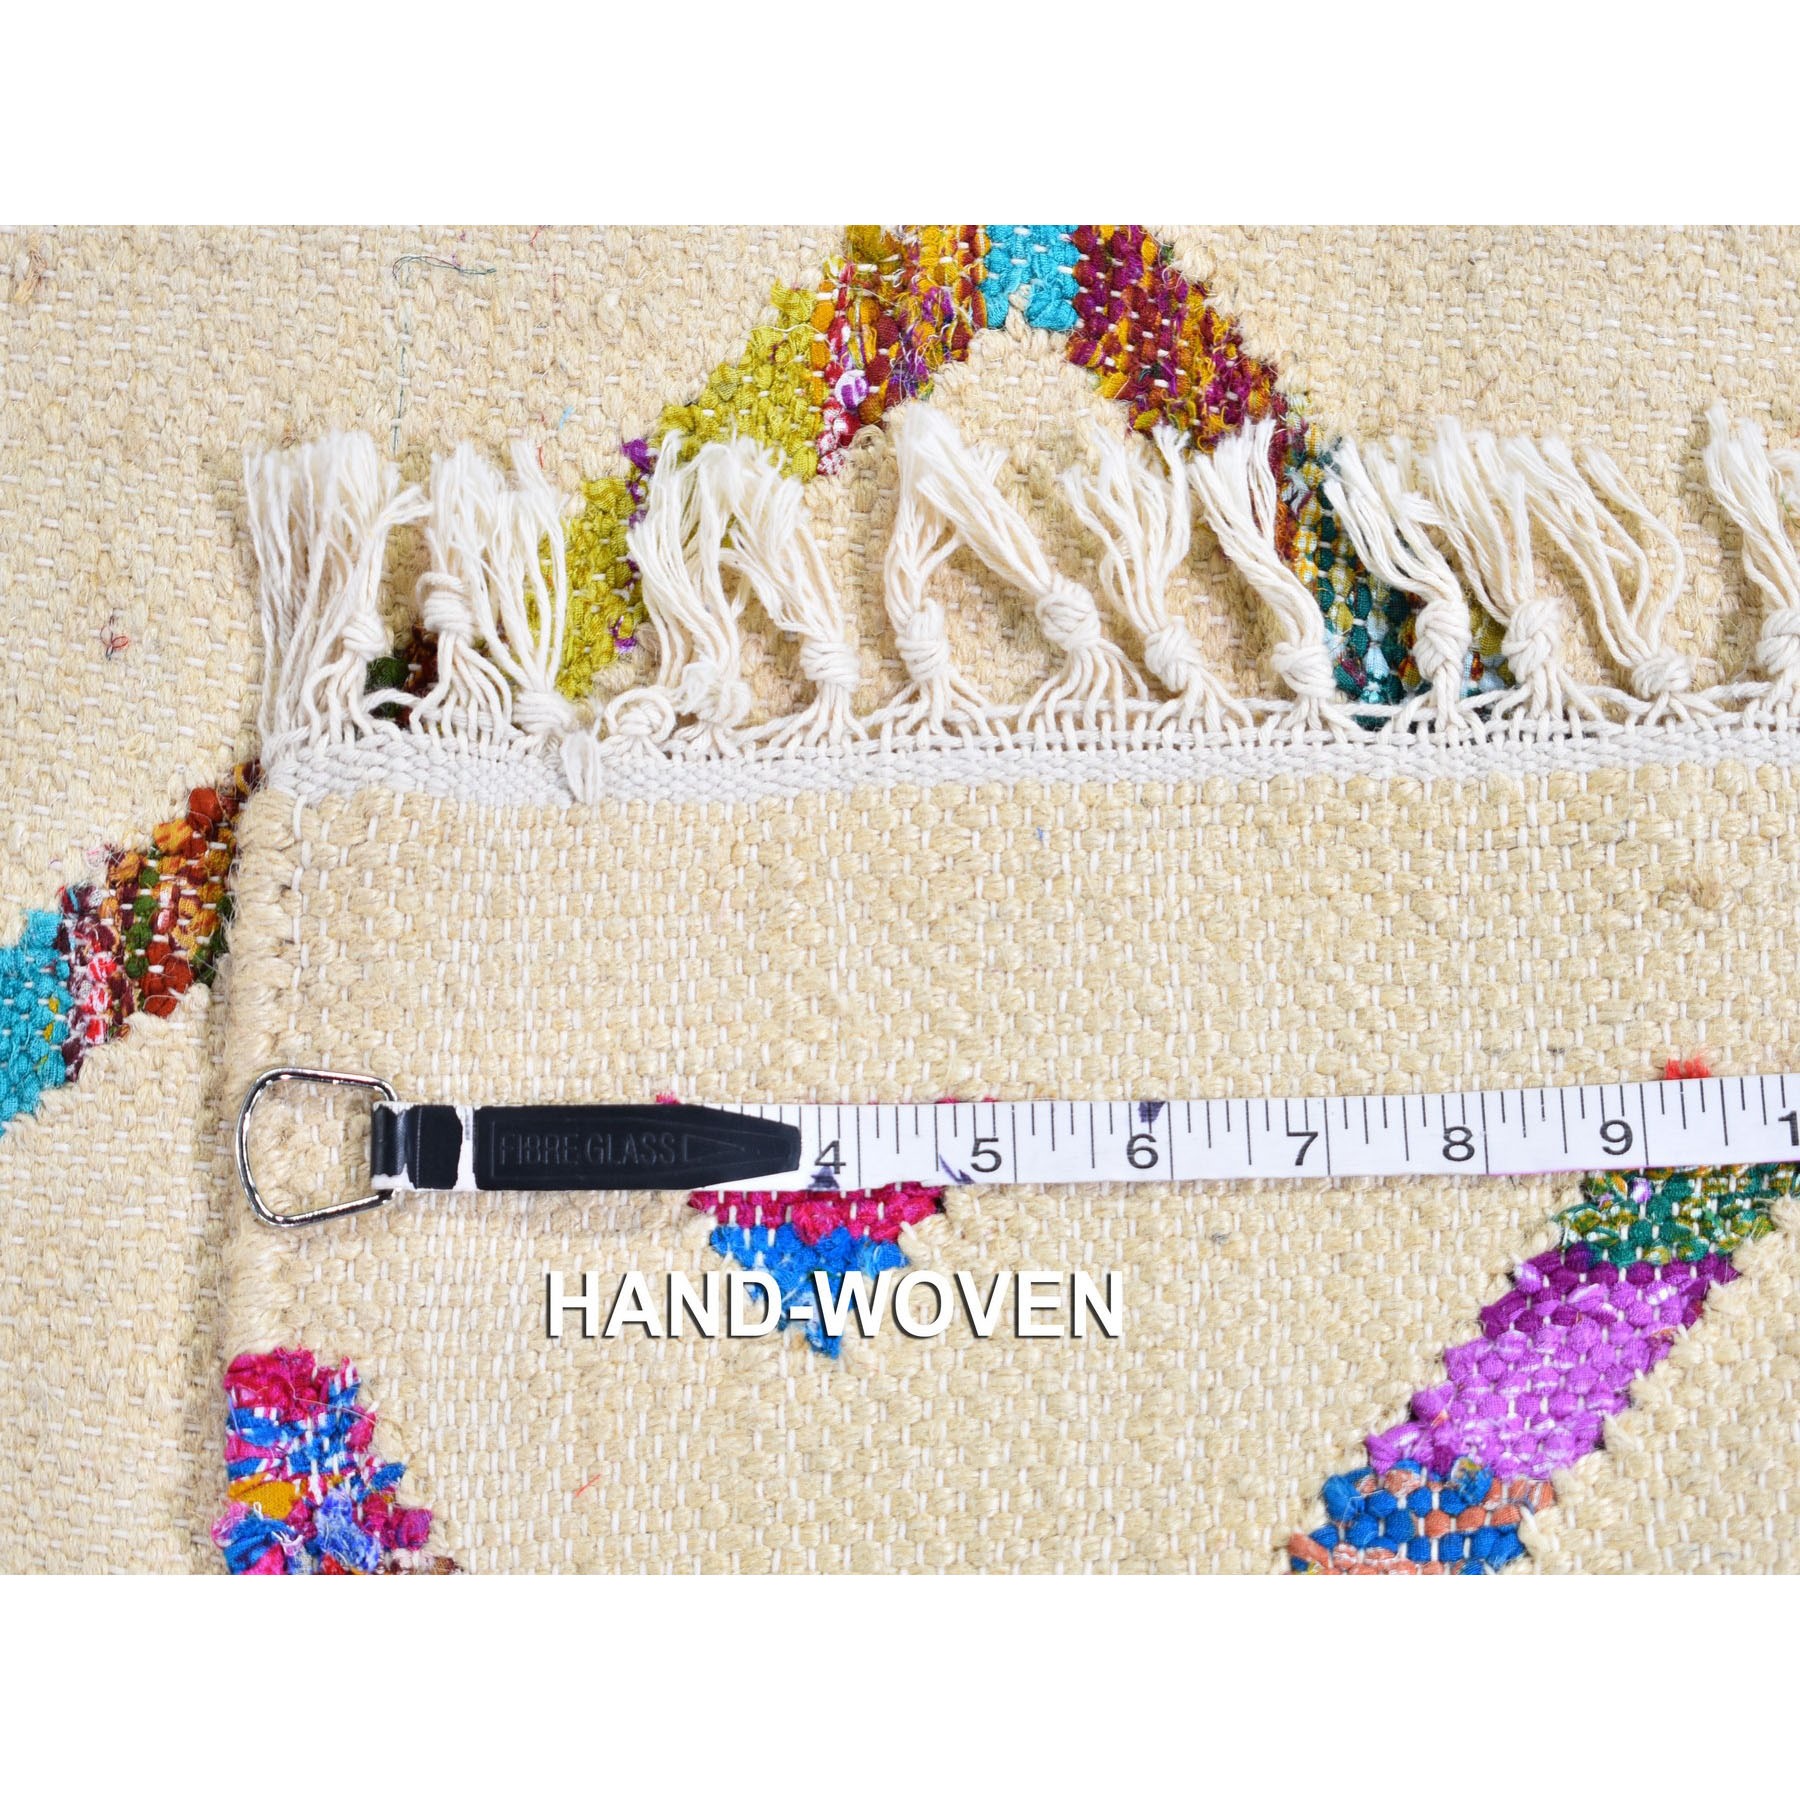 2-7 x9-10  Cotton And Sari Silk Durie Kilim Hand Woven Runner Oriental Rug 